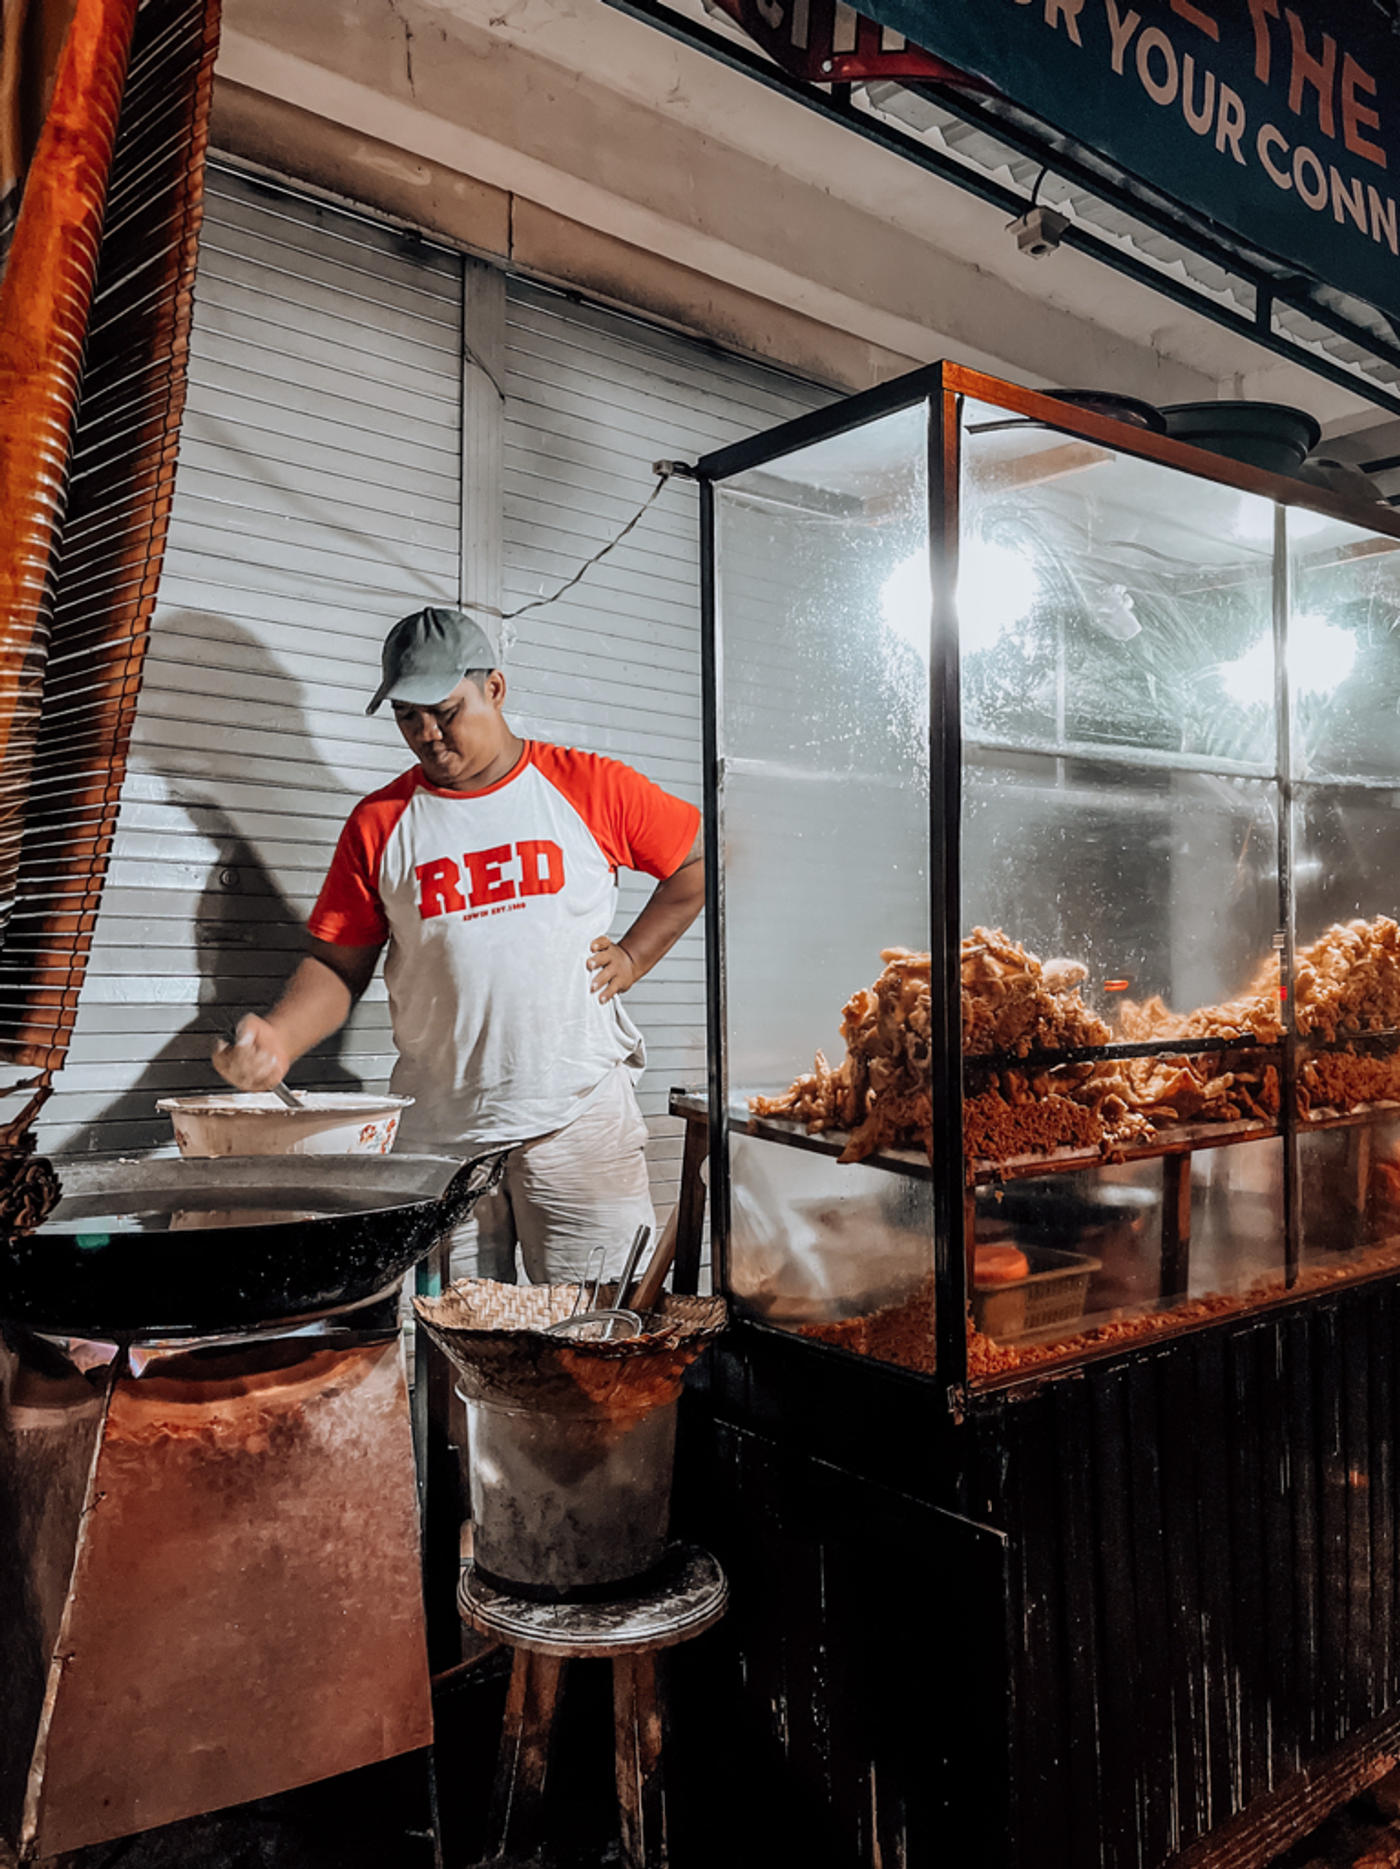 Balinesisches Street Food überall